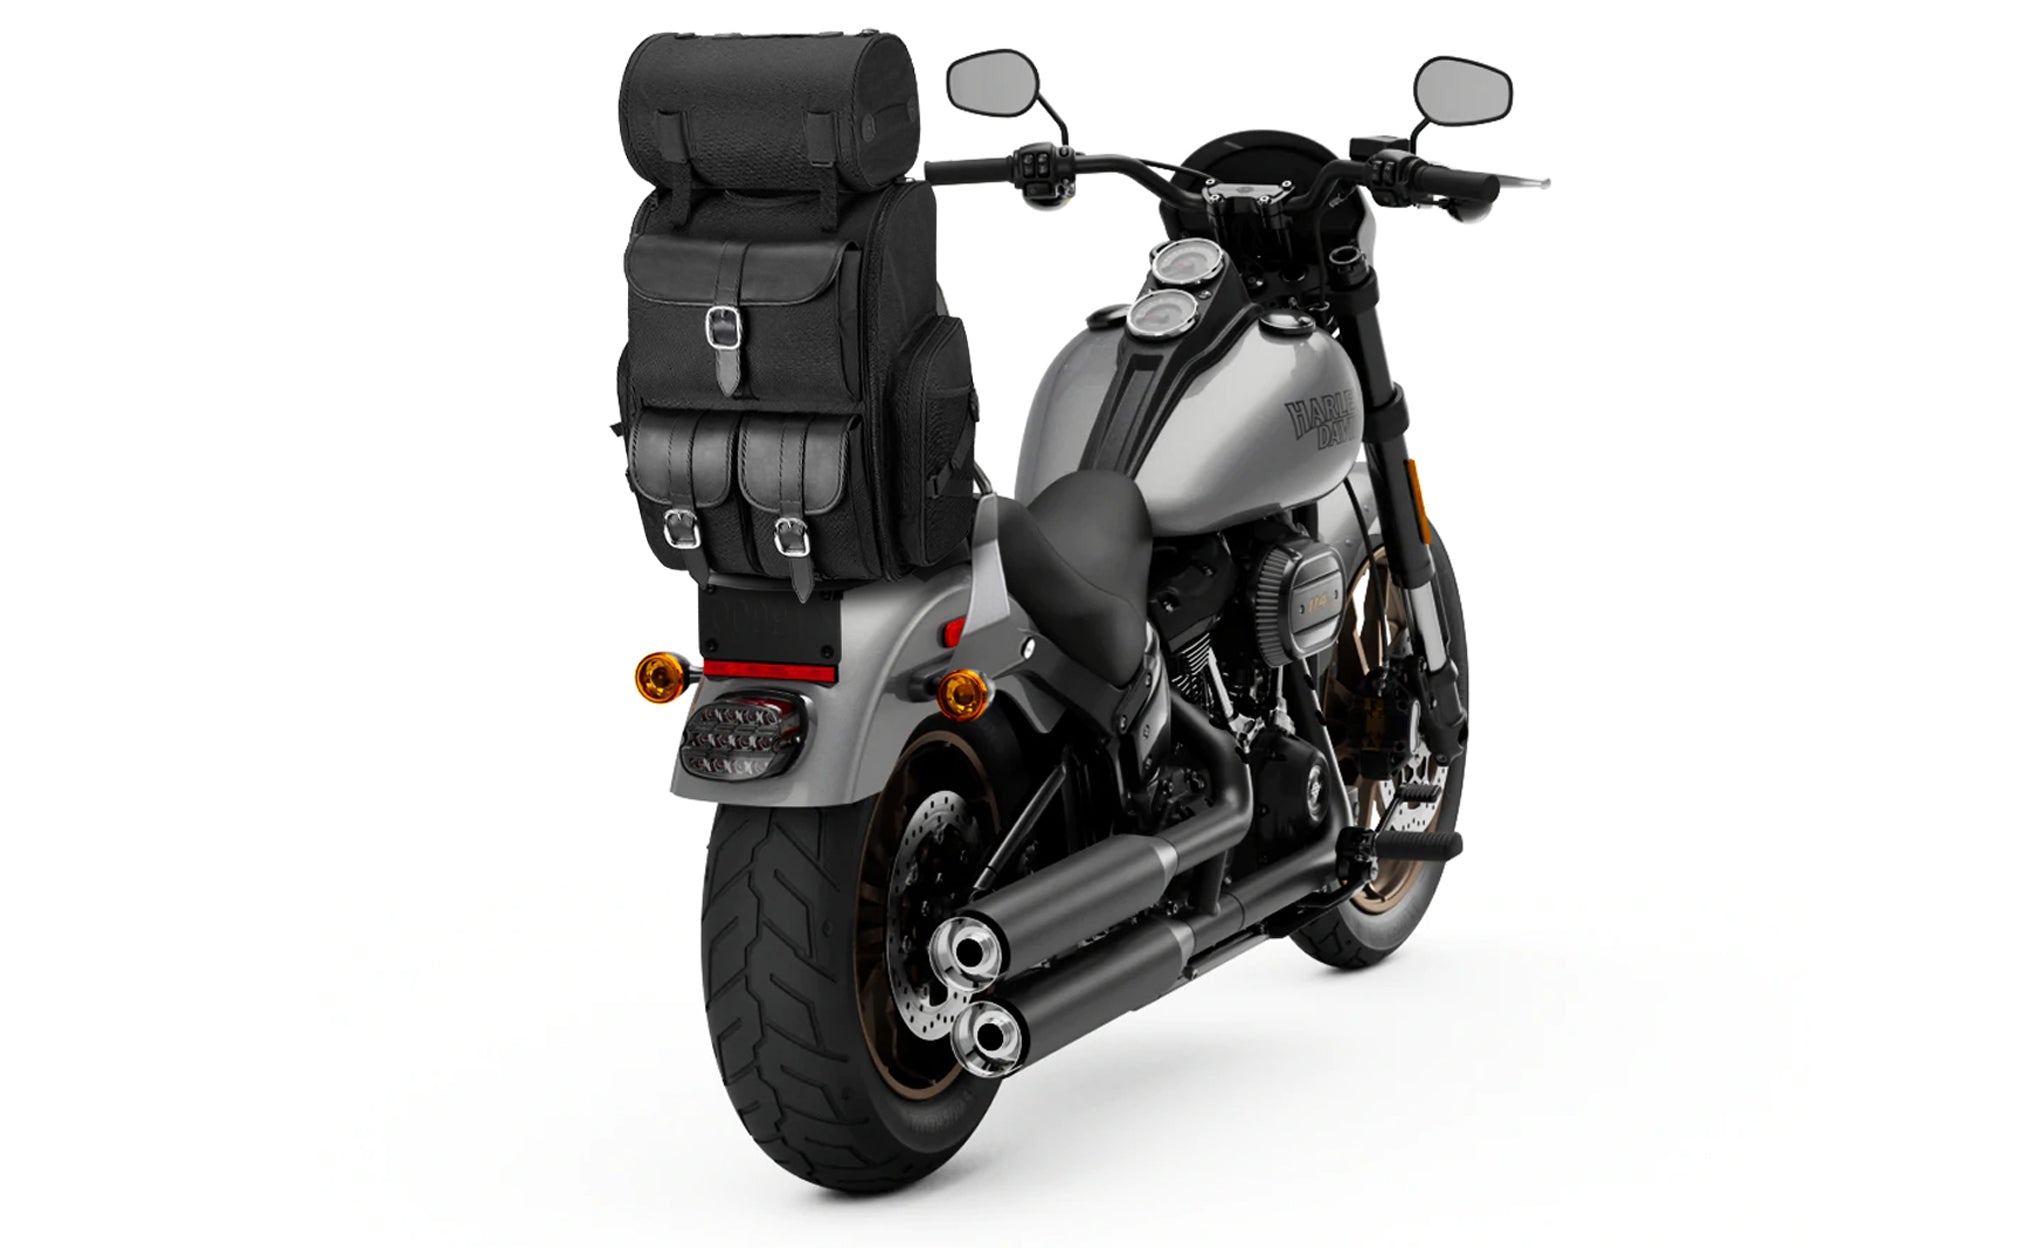 Viking Highway Extra Large Plain Honda Motorcycle Sissy Bar Bag Bag on Bike View @expand